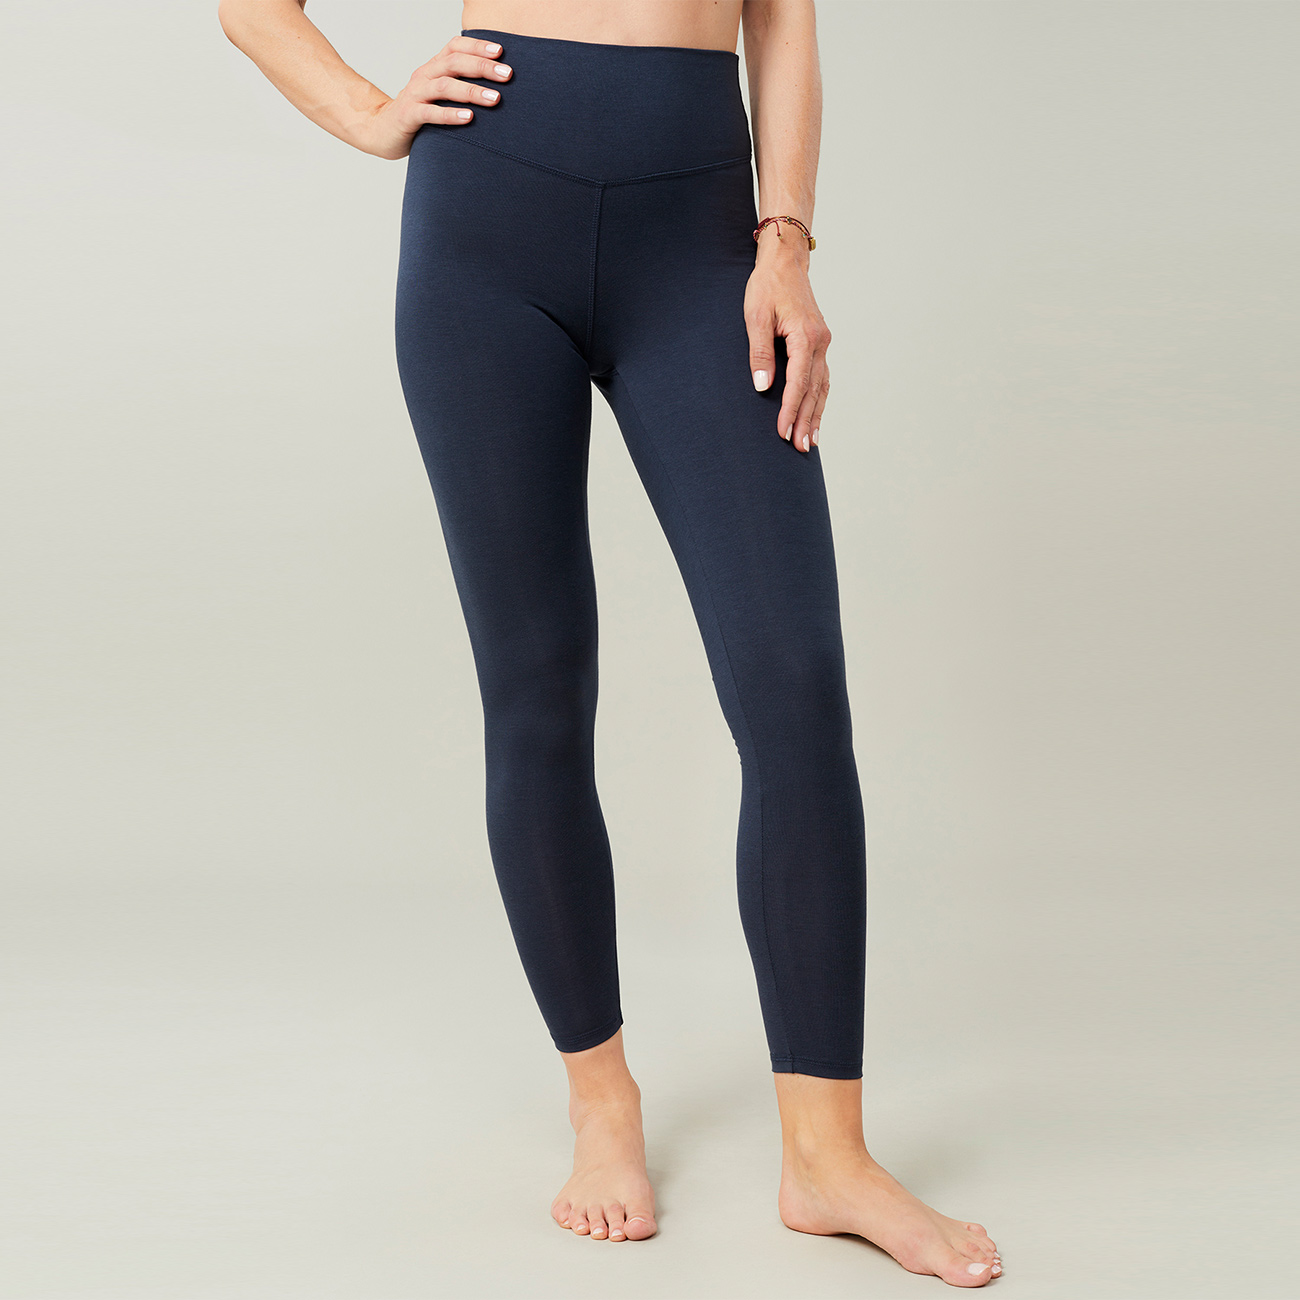 Shop our huge selection of trendy yoga leggings for women